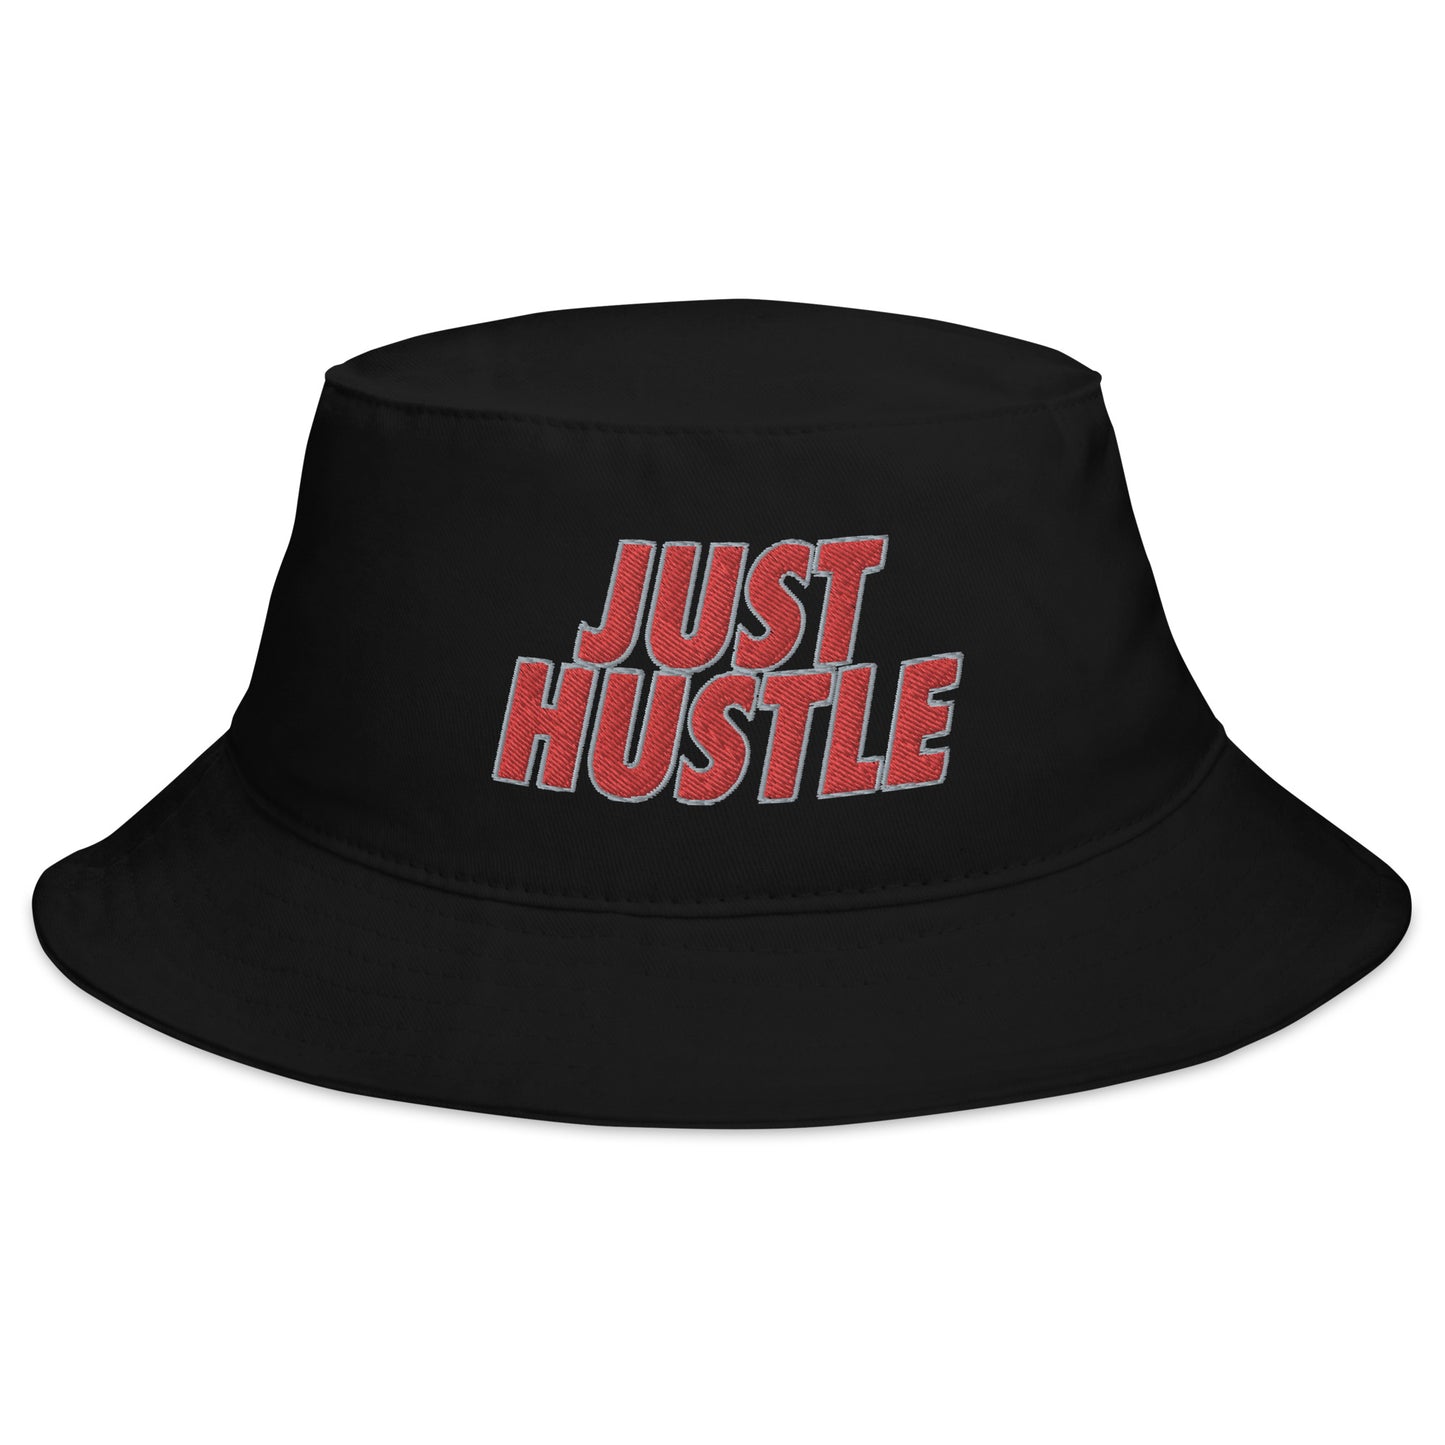 Just Hustle black Bucket Hat